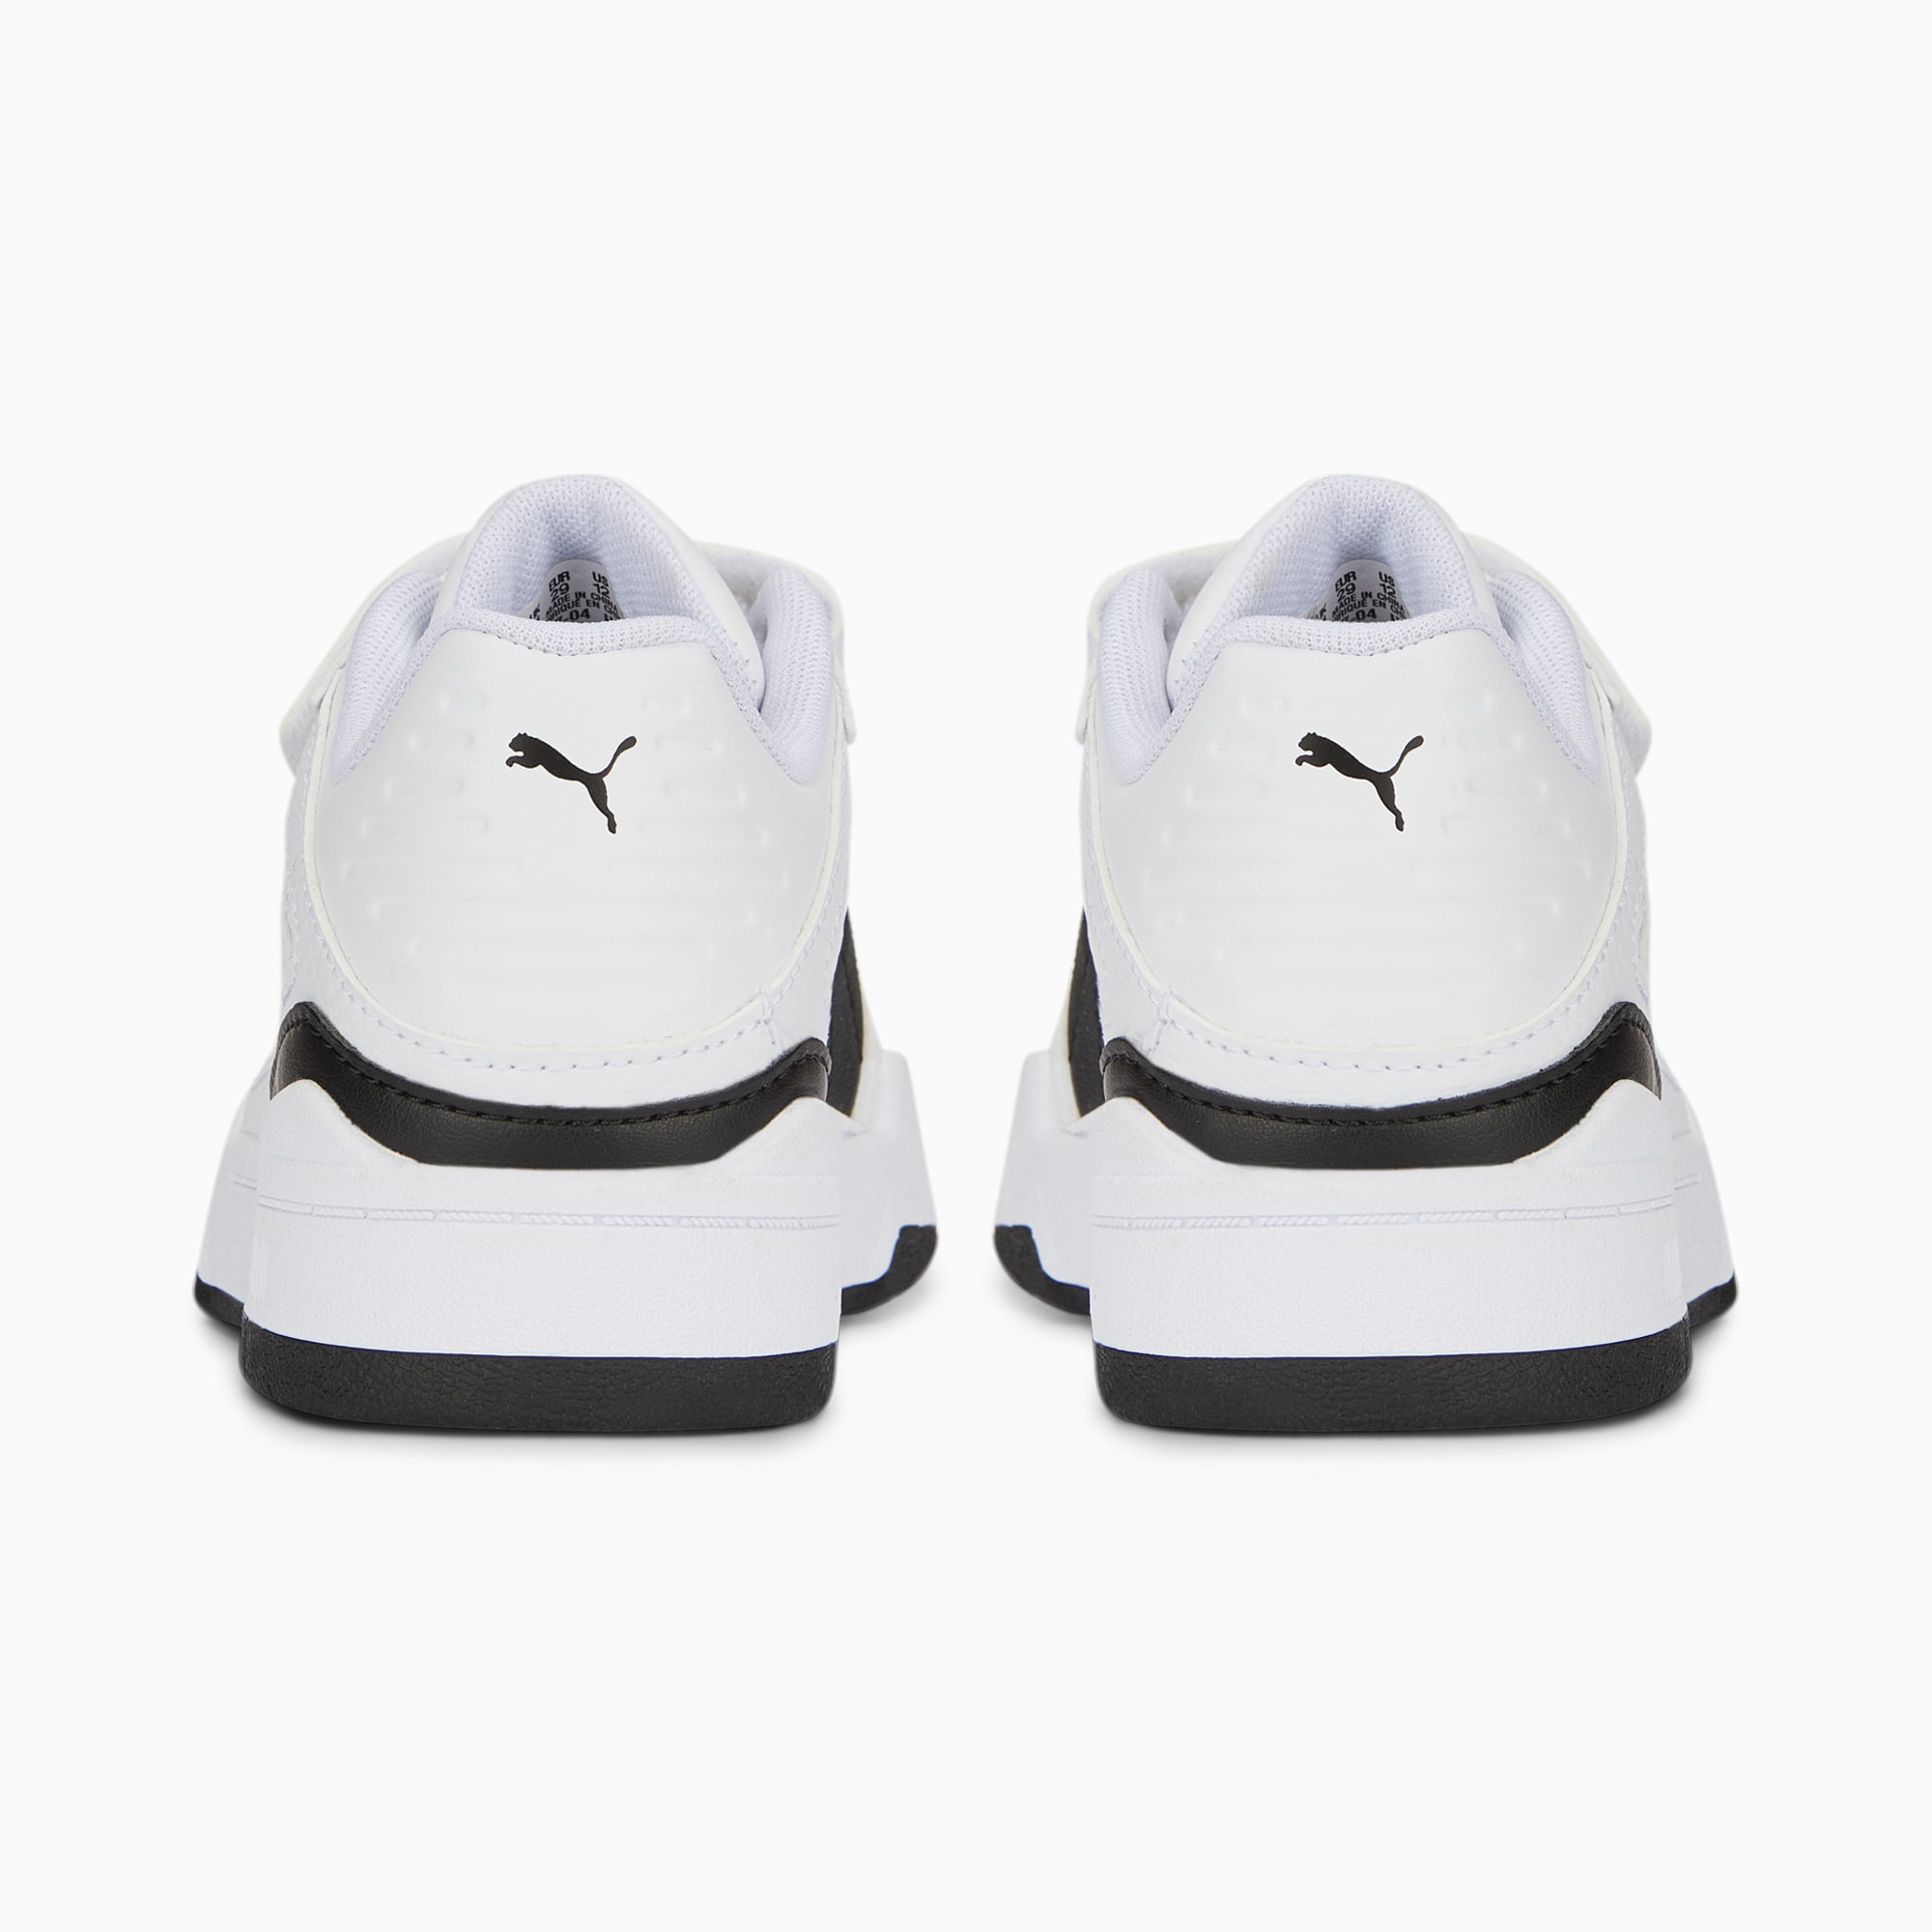 PUMA Chaussure Baskets En Cuir à Fermeture Facile Slipstream Enfant, Blanc/Noir